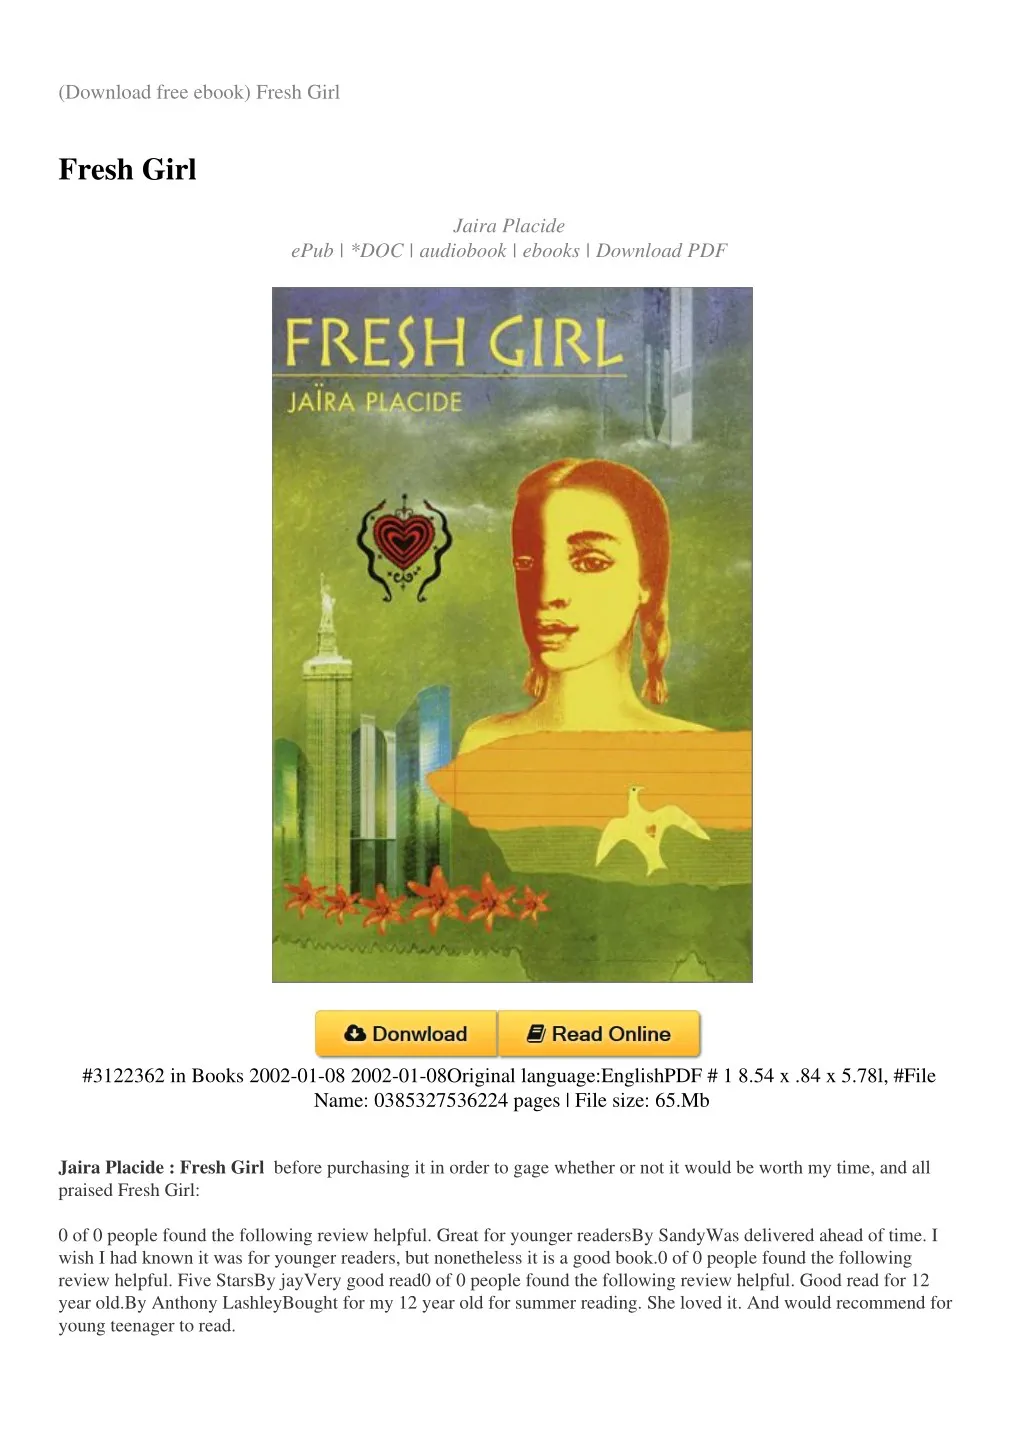 download free ebook fresh girl